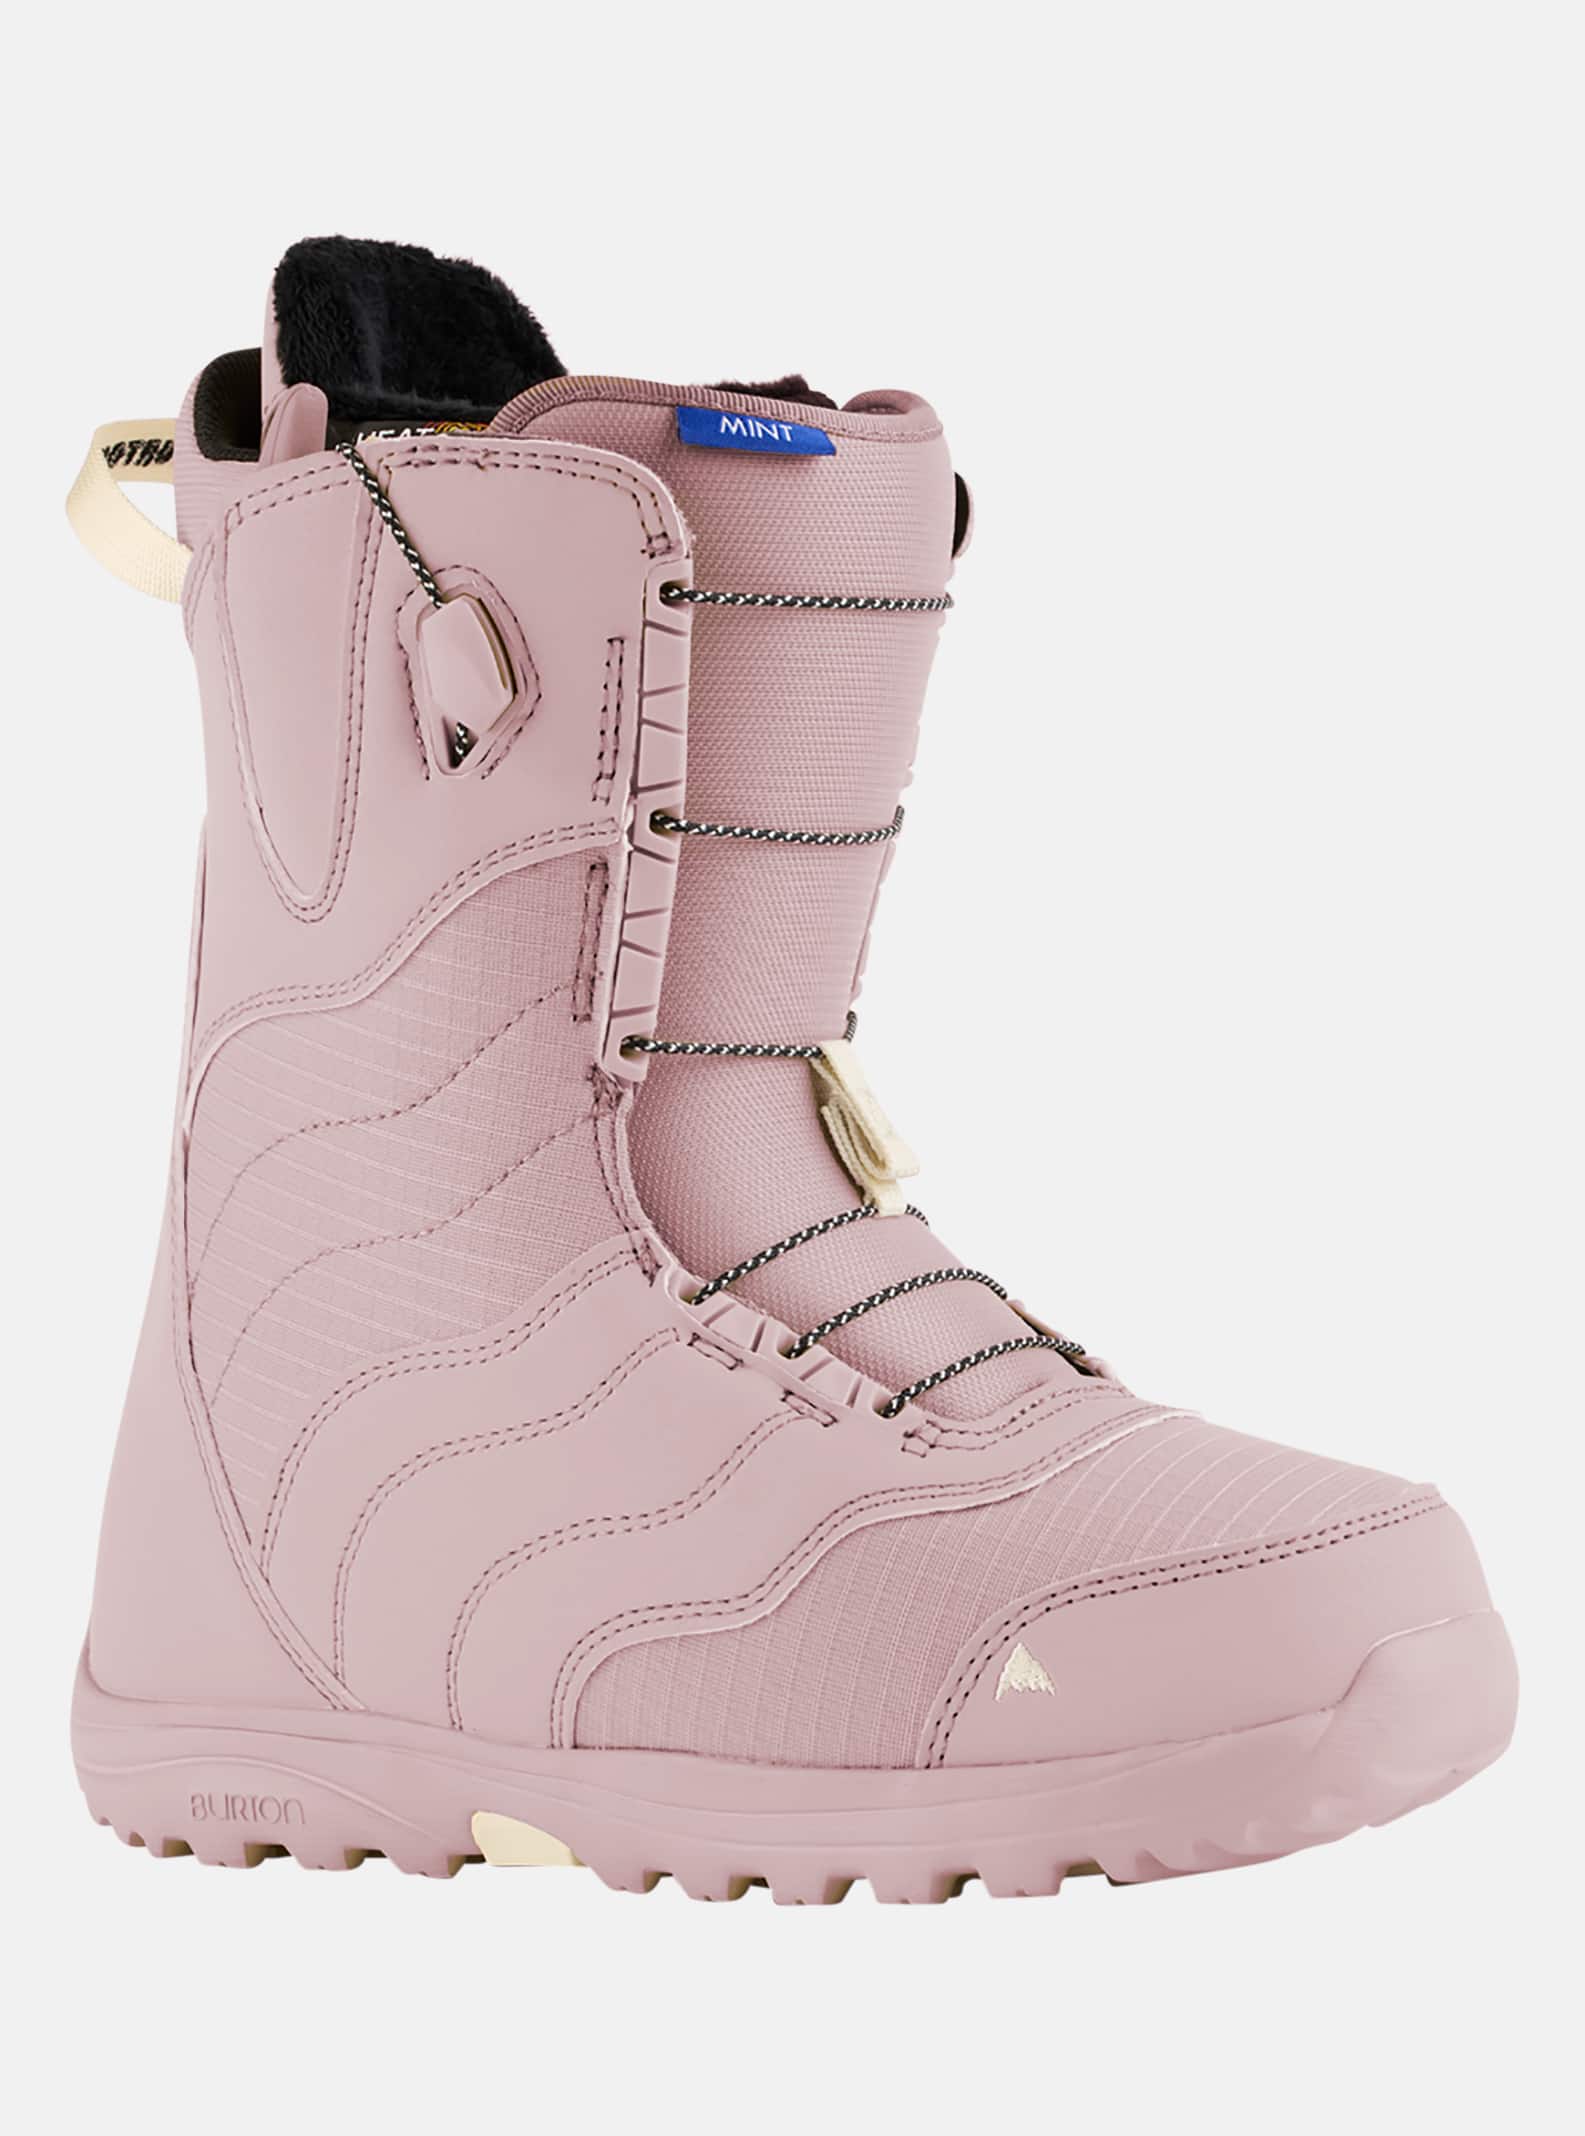 Women's Burton Mint Snowboard Boots